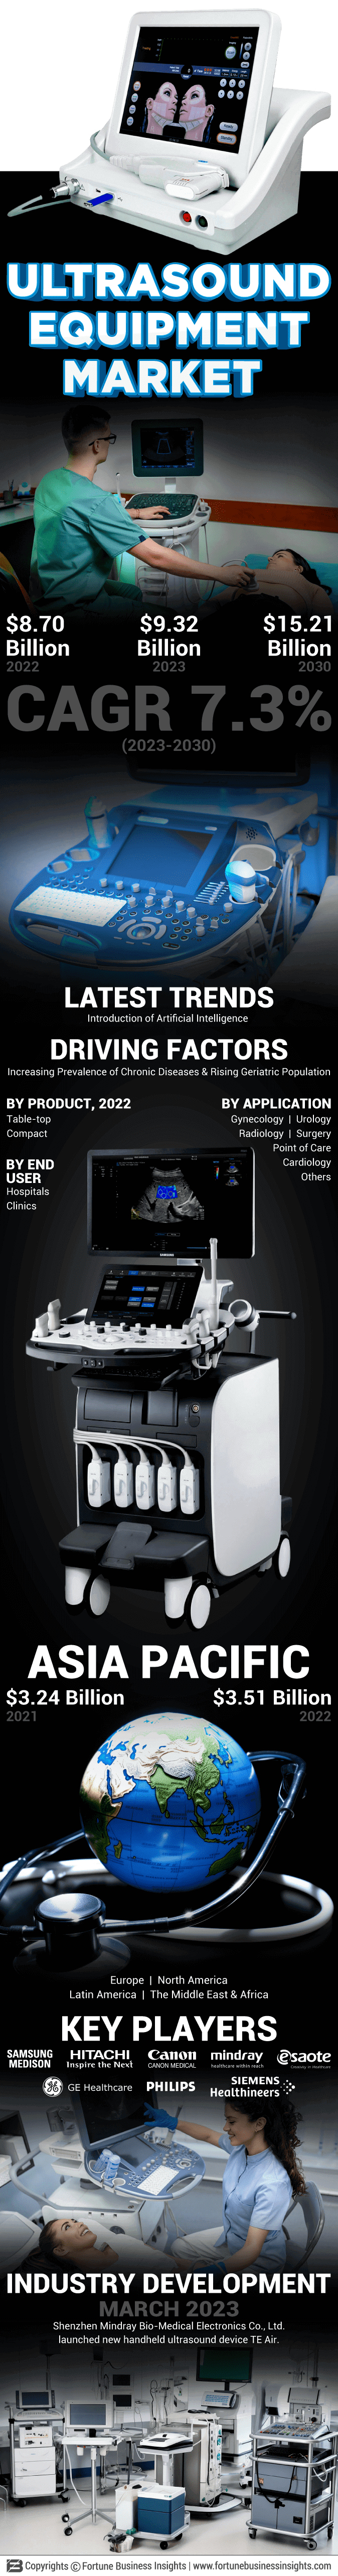 Ultrasound Equipment Market